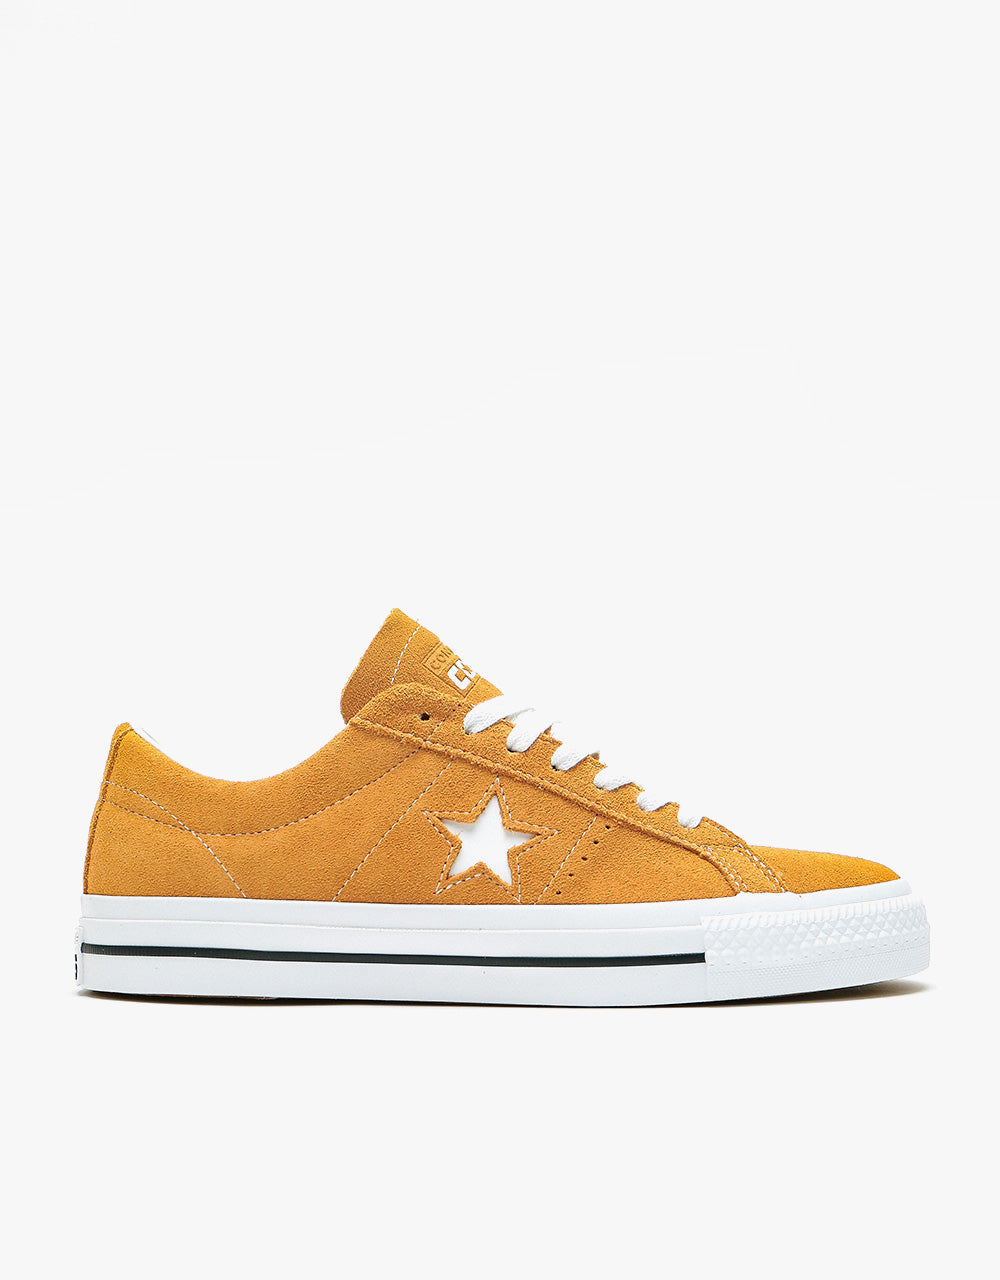 Converse One Star Pro Skate Shoes - Wheat/White/Black